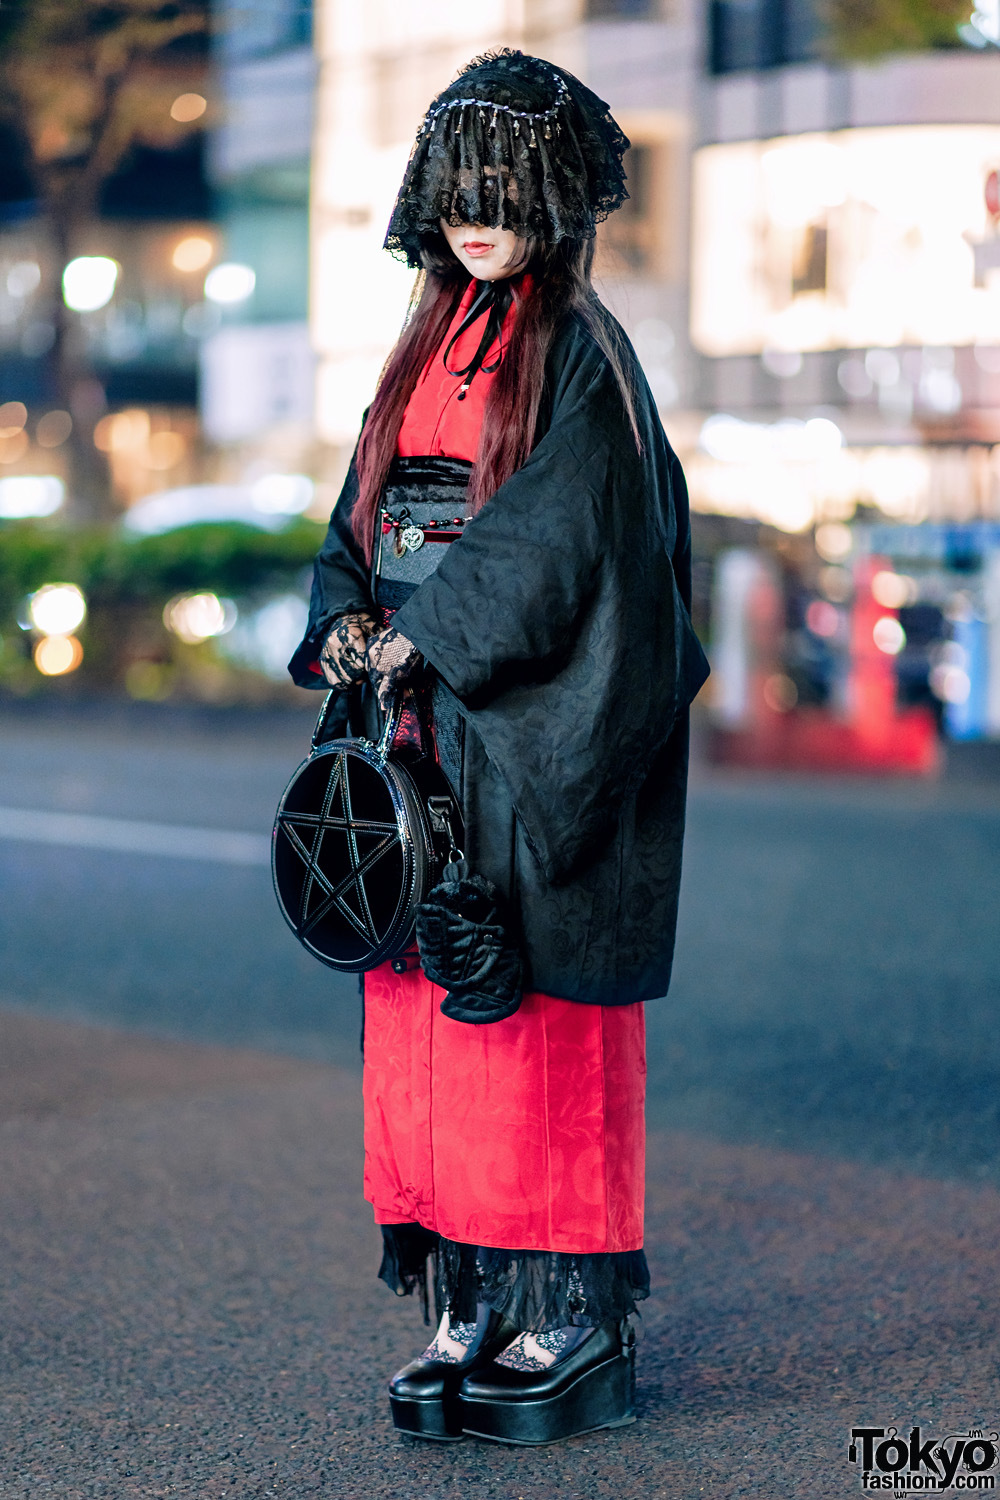 Japanese Vintage Kimono Gothic Street Style w/ Veil Headdress, Lace Gloves, Platforms & Kill Star Bag